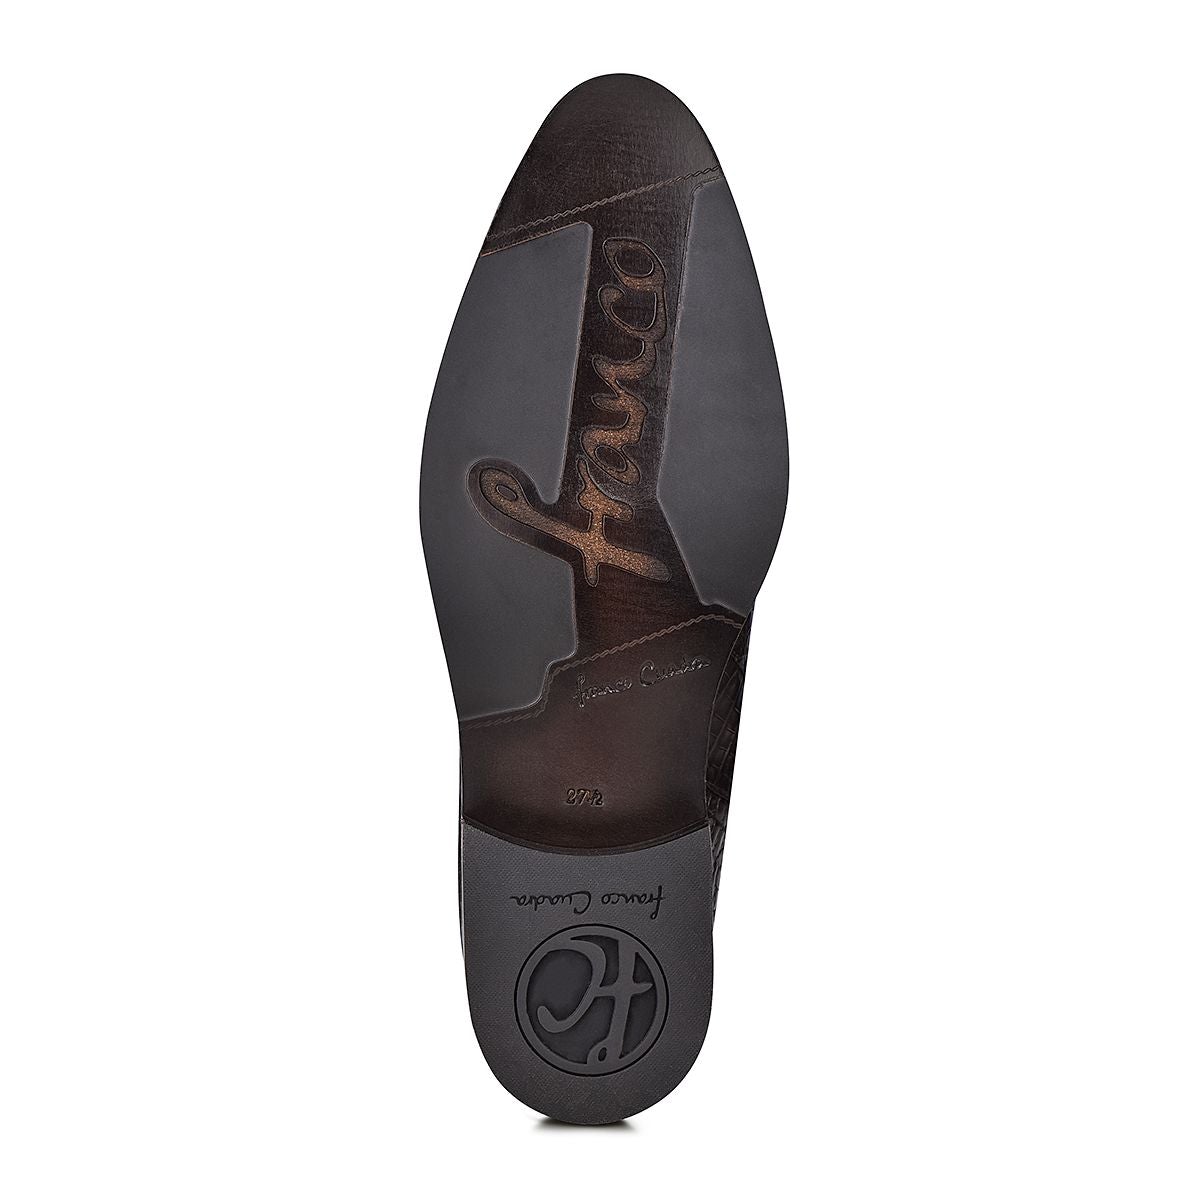 827FWTS - Cuadra brown casual dress caiman ankle boots for men-FRANCO CUADRA-Kuet-Cuadra-Boots